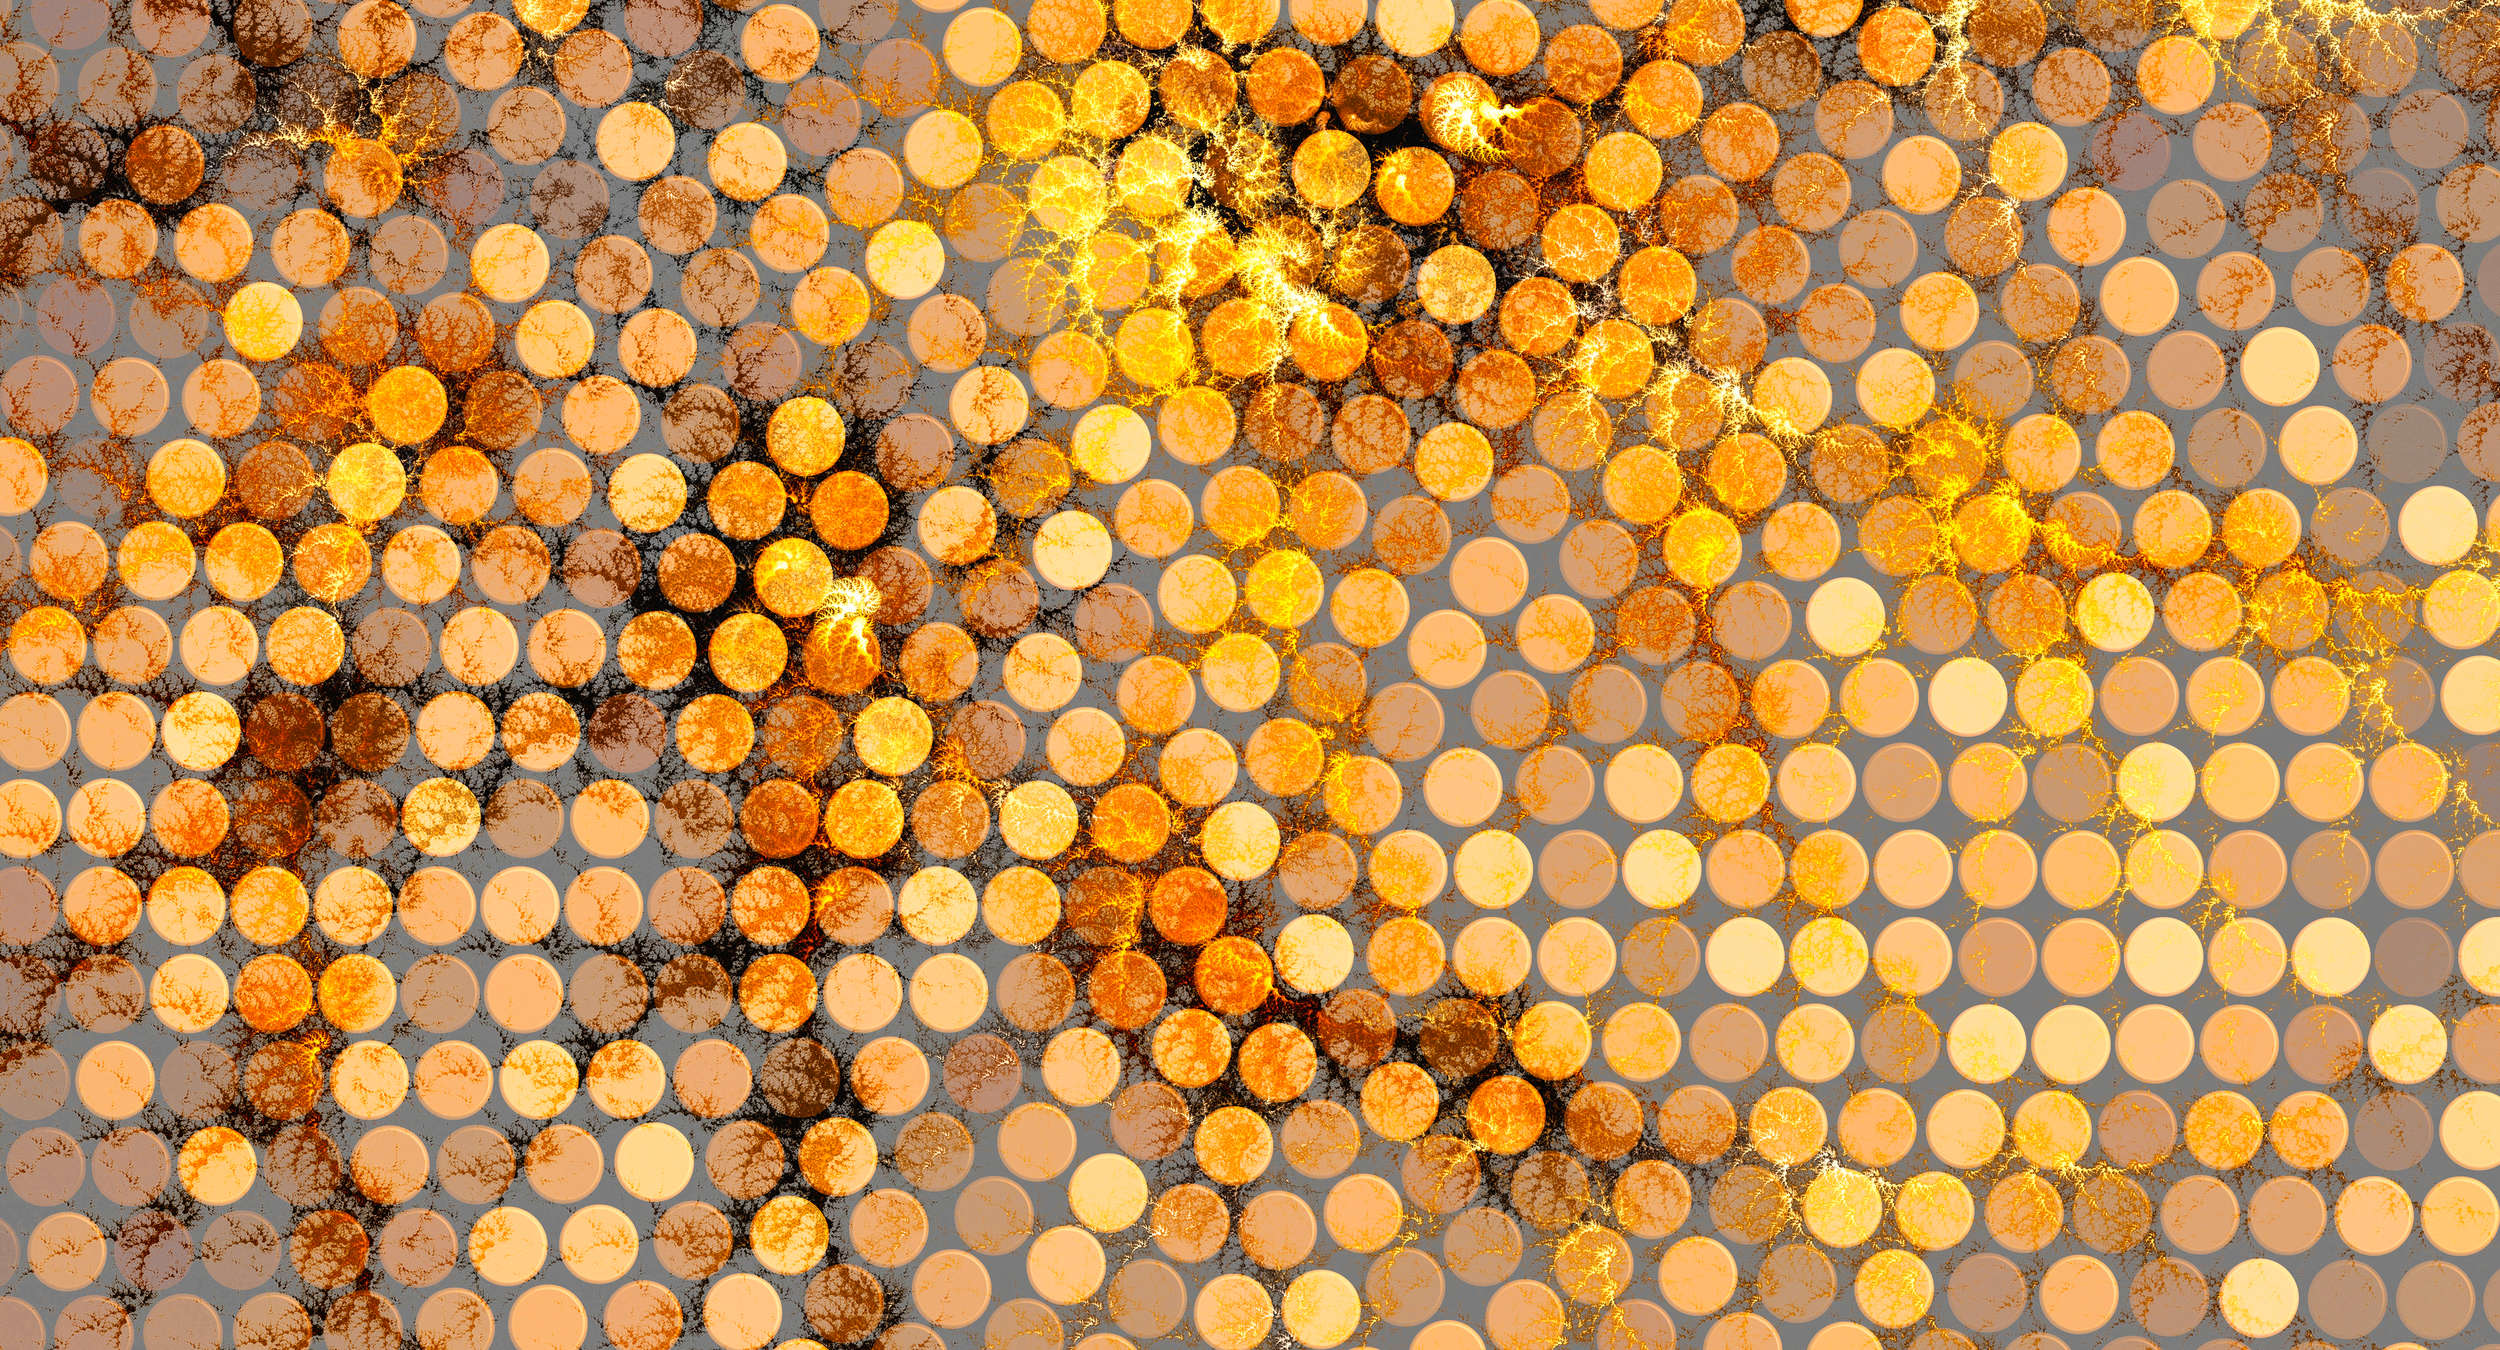             Photo wallpaper graphic with texture pattern & dot design - orange, yellow, brown
        